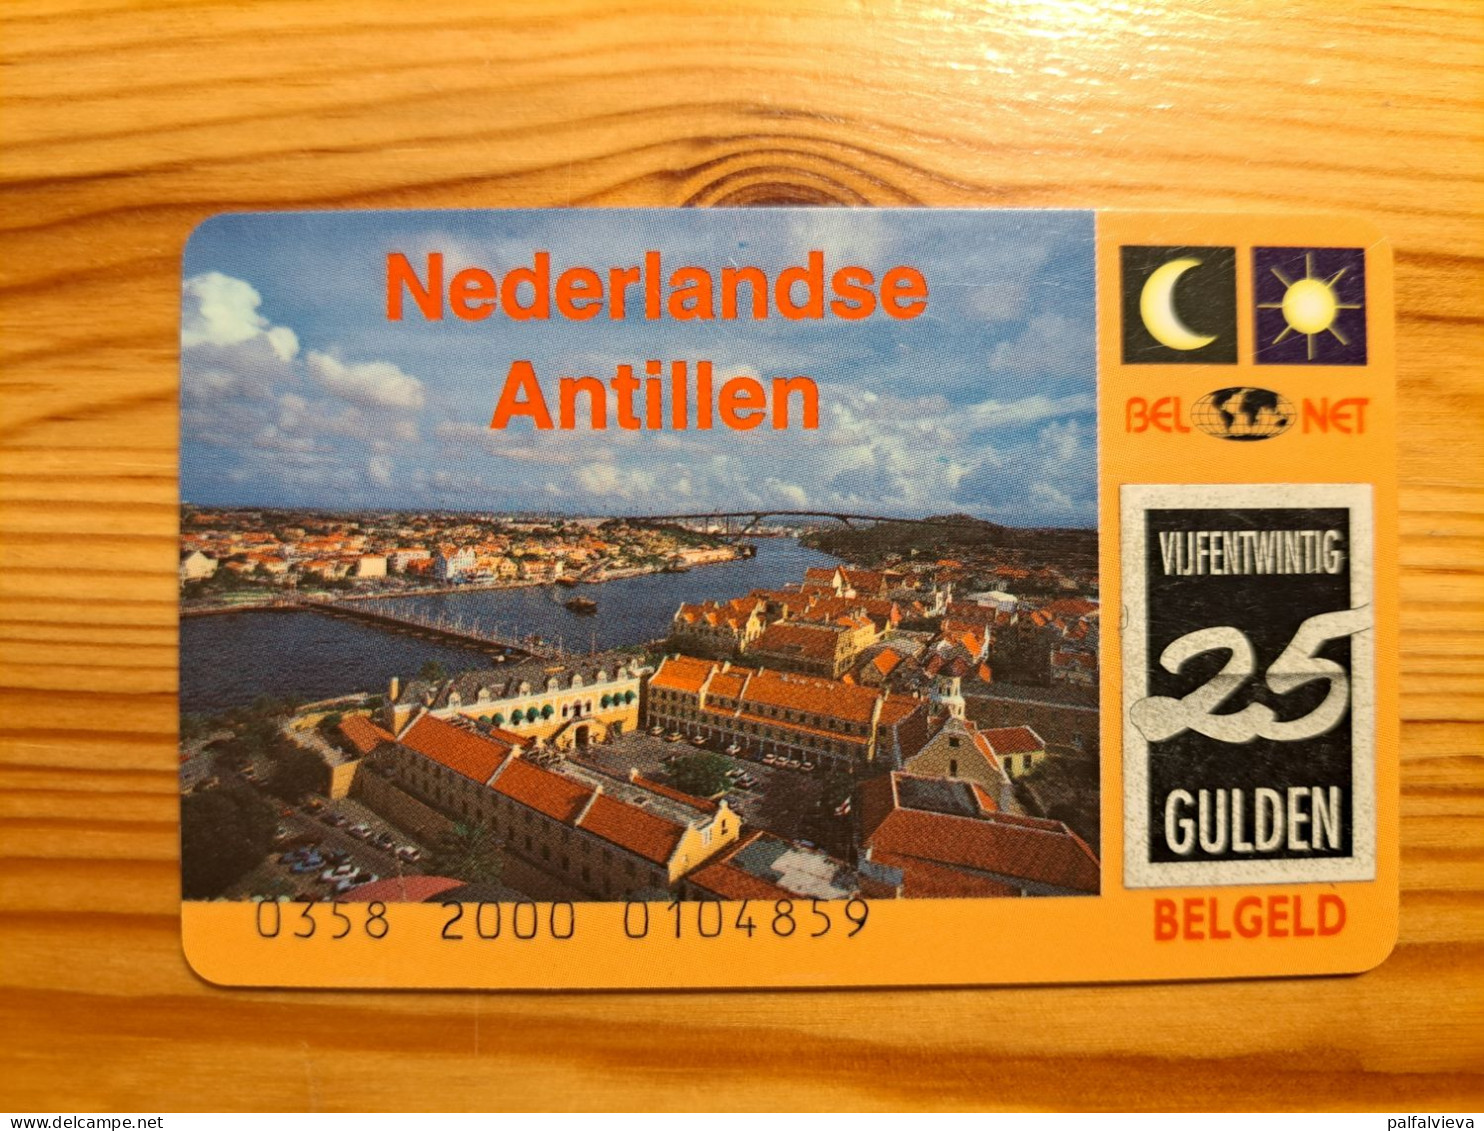 Prepaid Phonecard Netherlands, BelNet - Netherlands Antillen - [3] Tarjetas Móvil, Prepagadas Y Recargos